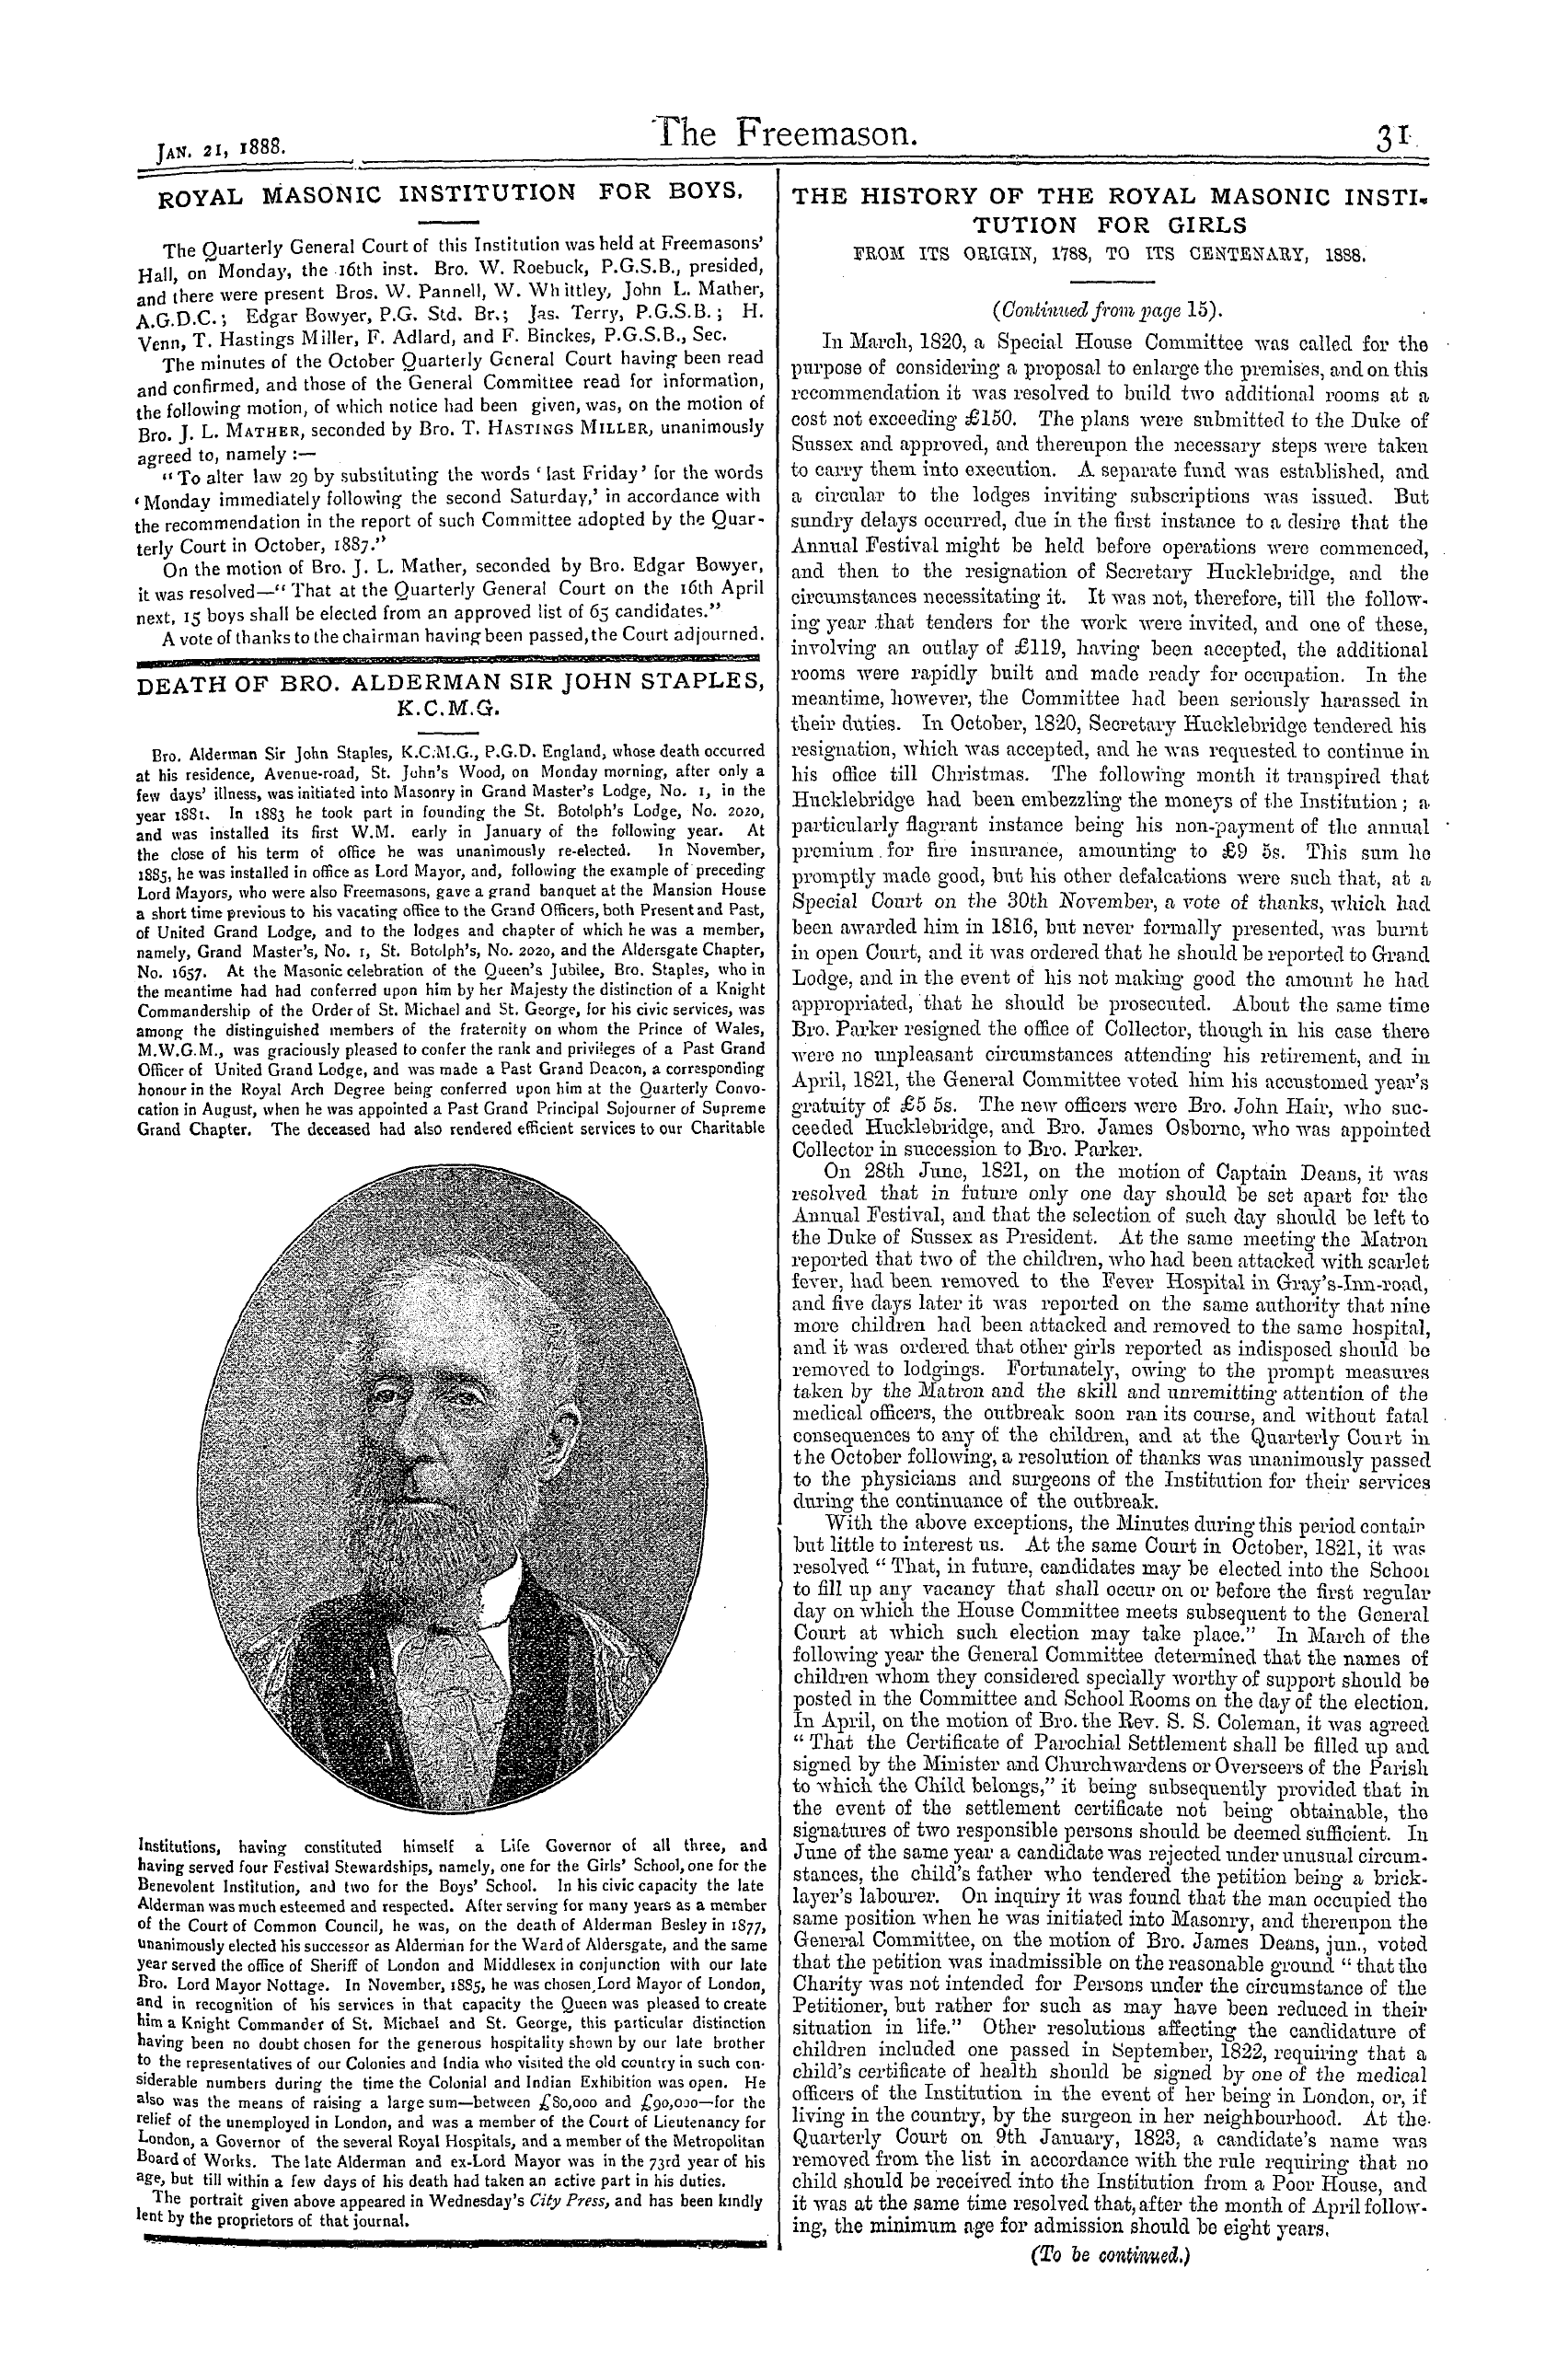 The Freemason: 1888-01-21 - Death Of Bro. Alderman Sir John Staples, K.C.M.G.